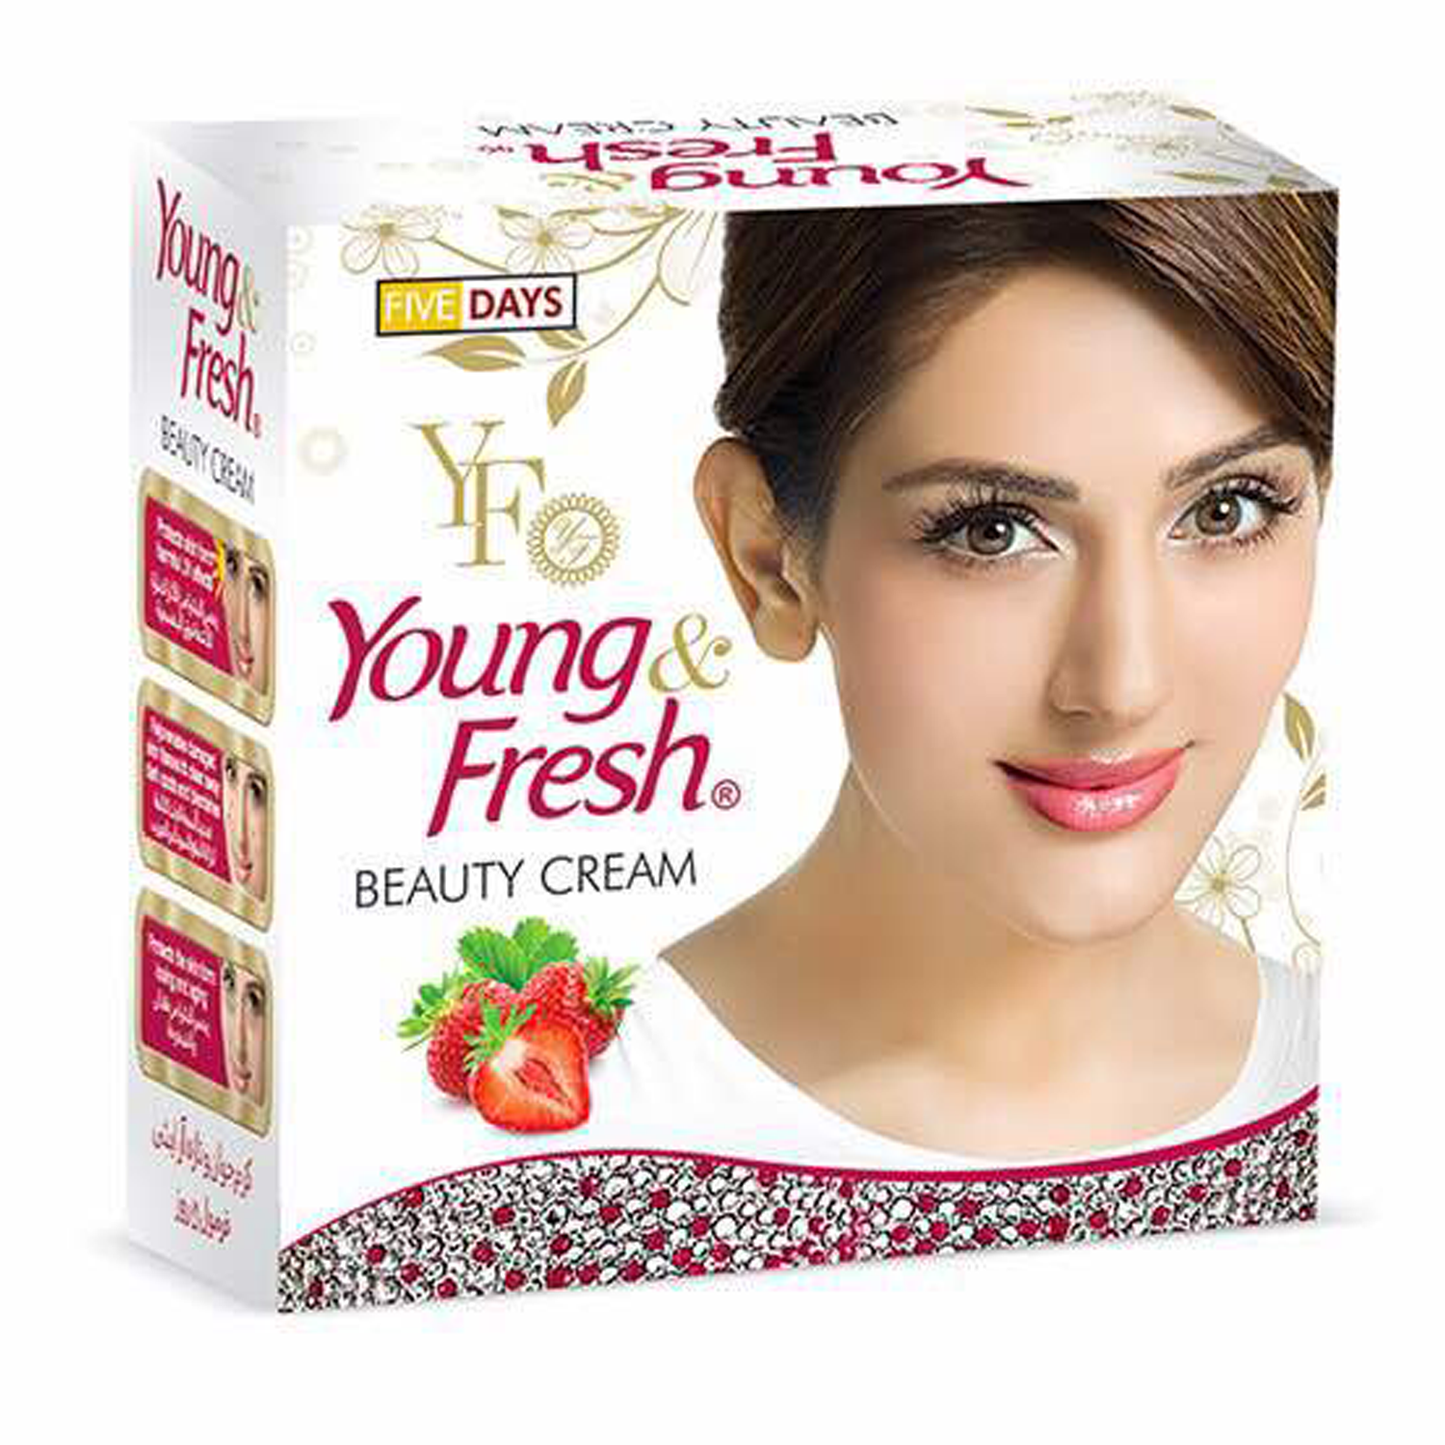 Young & Fresh Beauty Cream